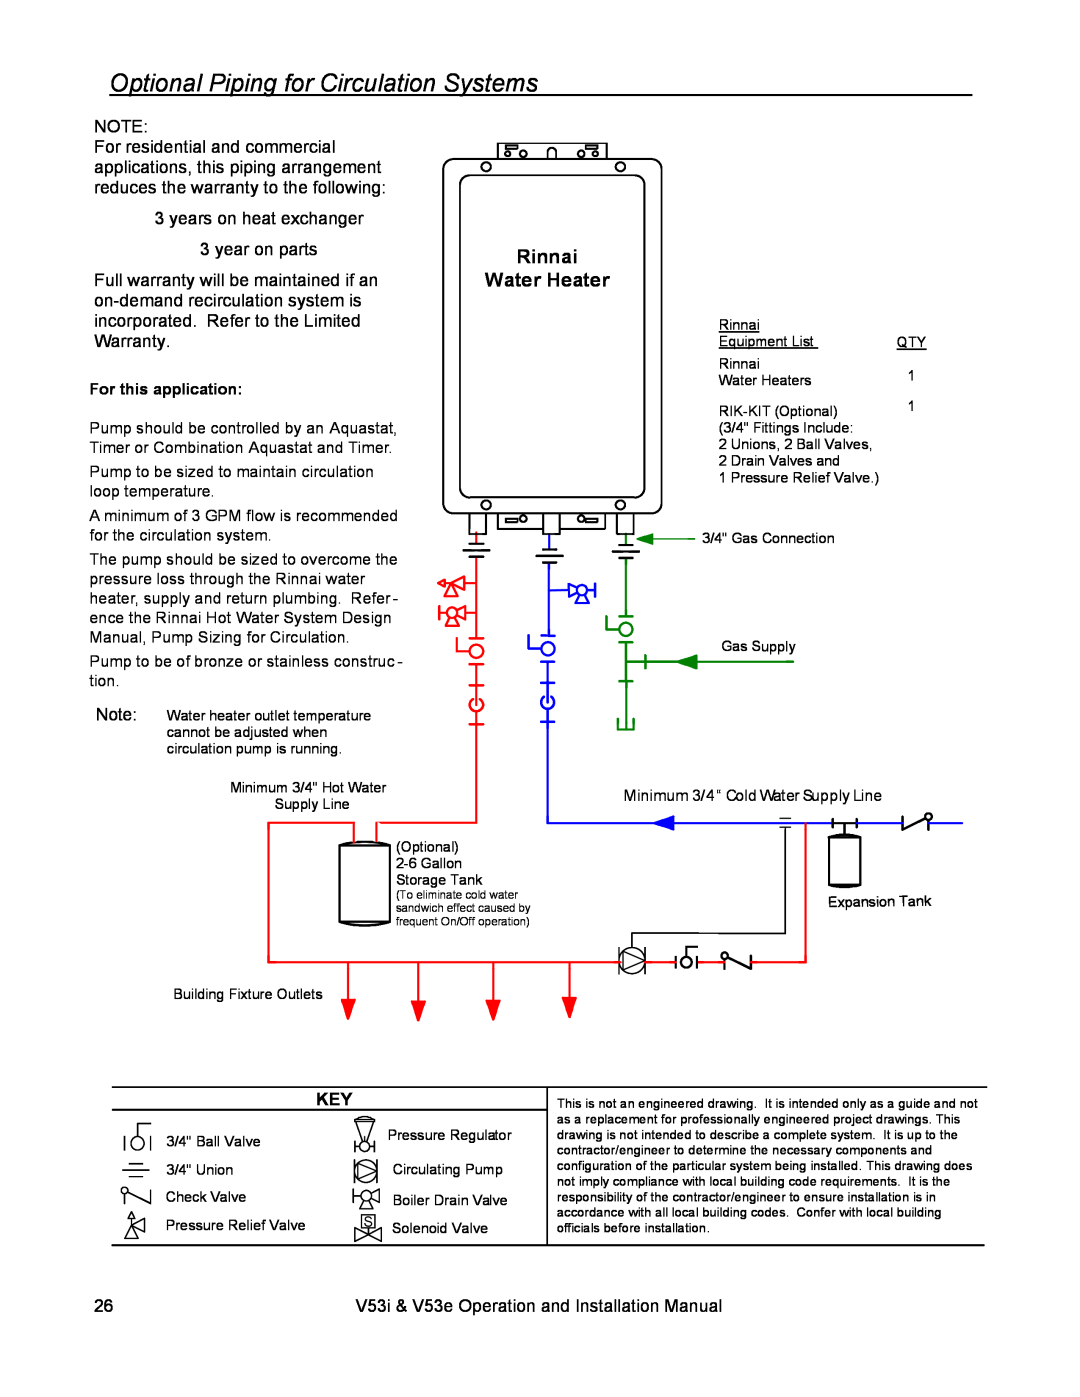 Rinnai V53E, V53I installation manual Optional Piping for Circulation Systems, Rinnai Water Heater, For this application 